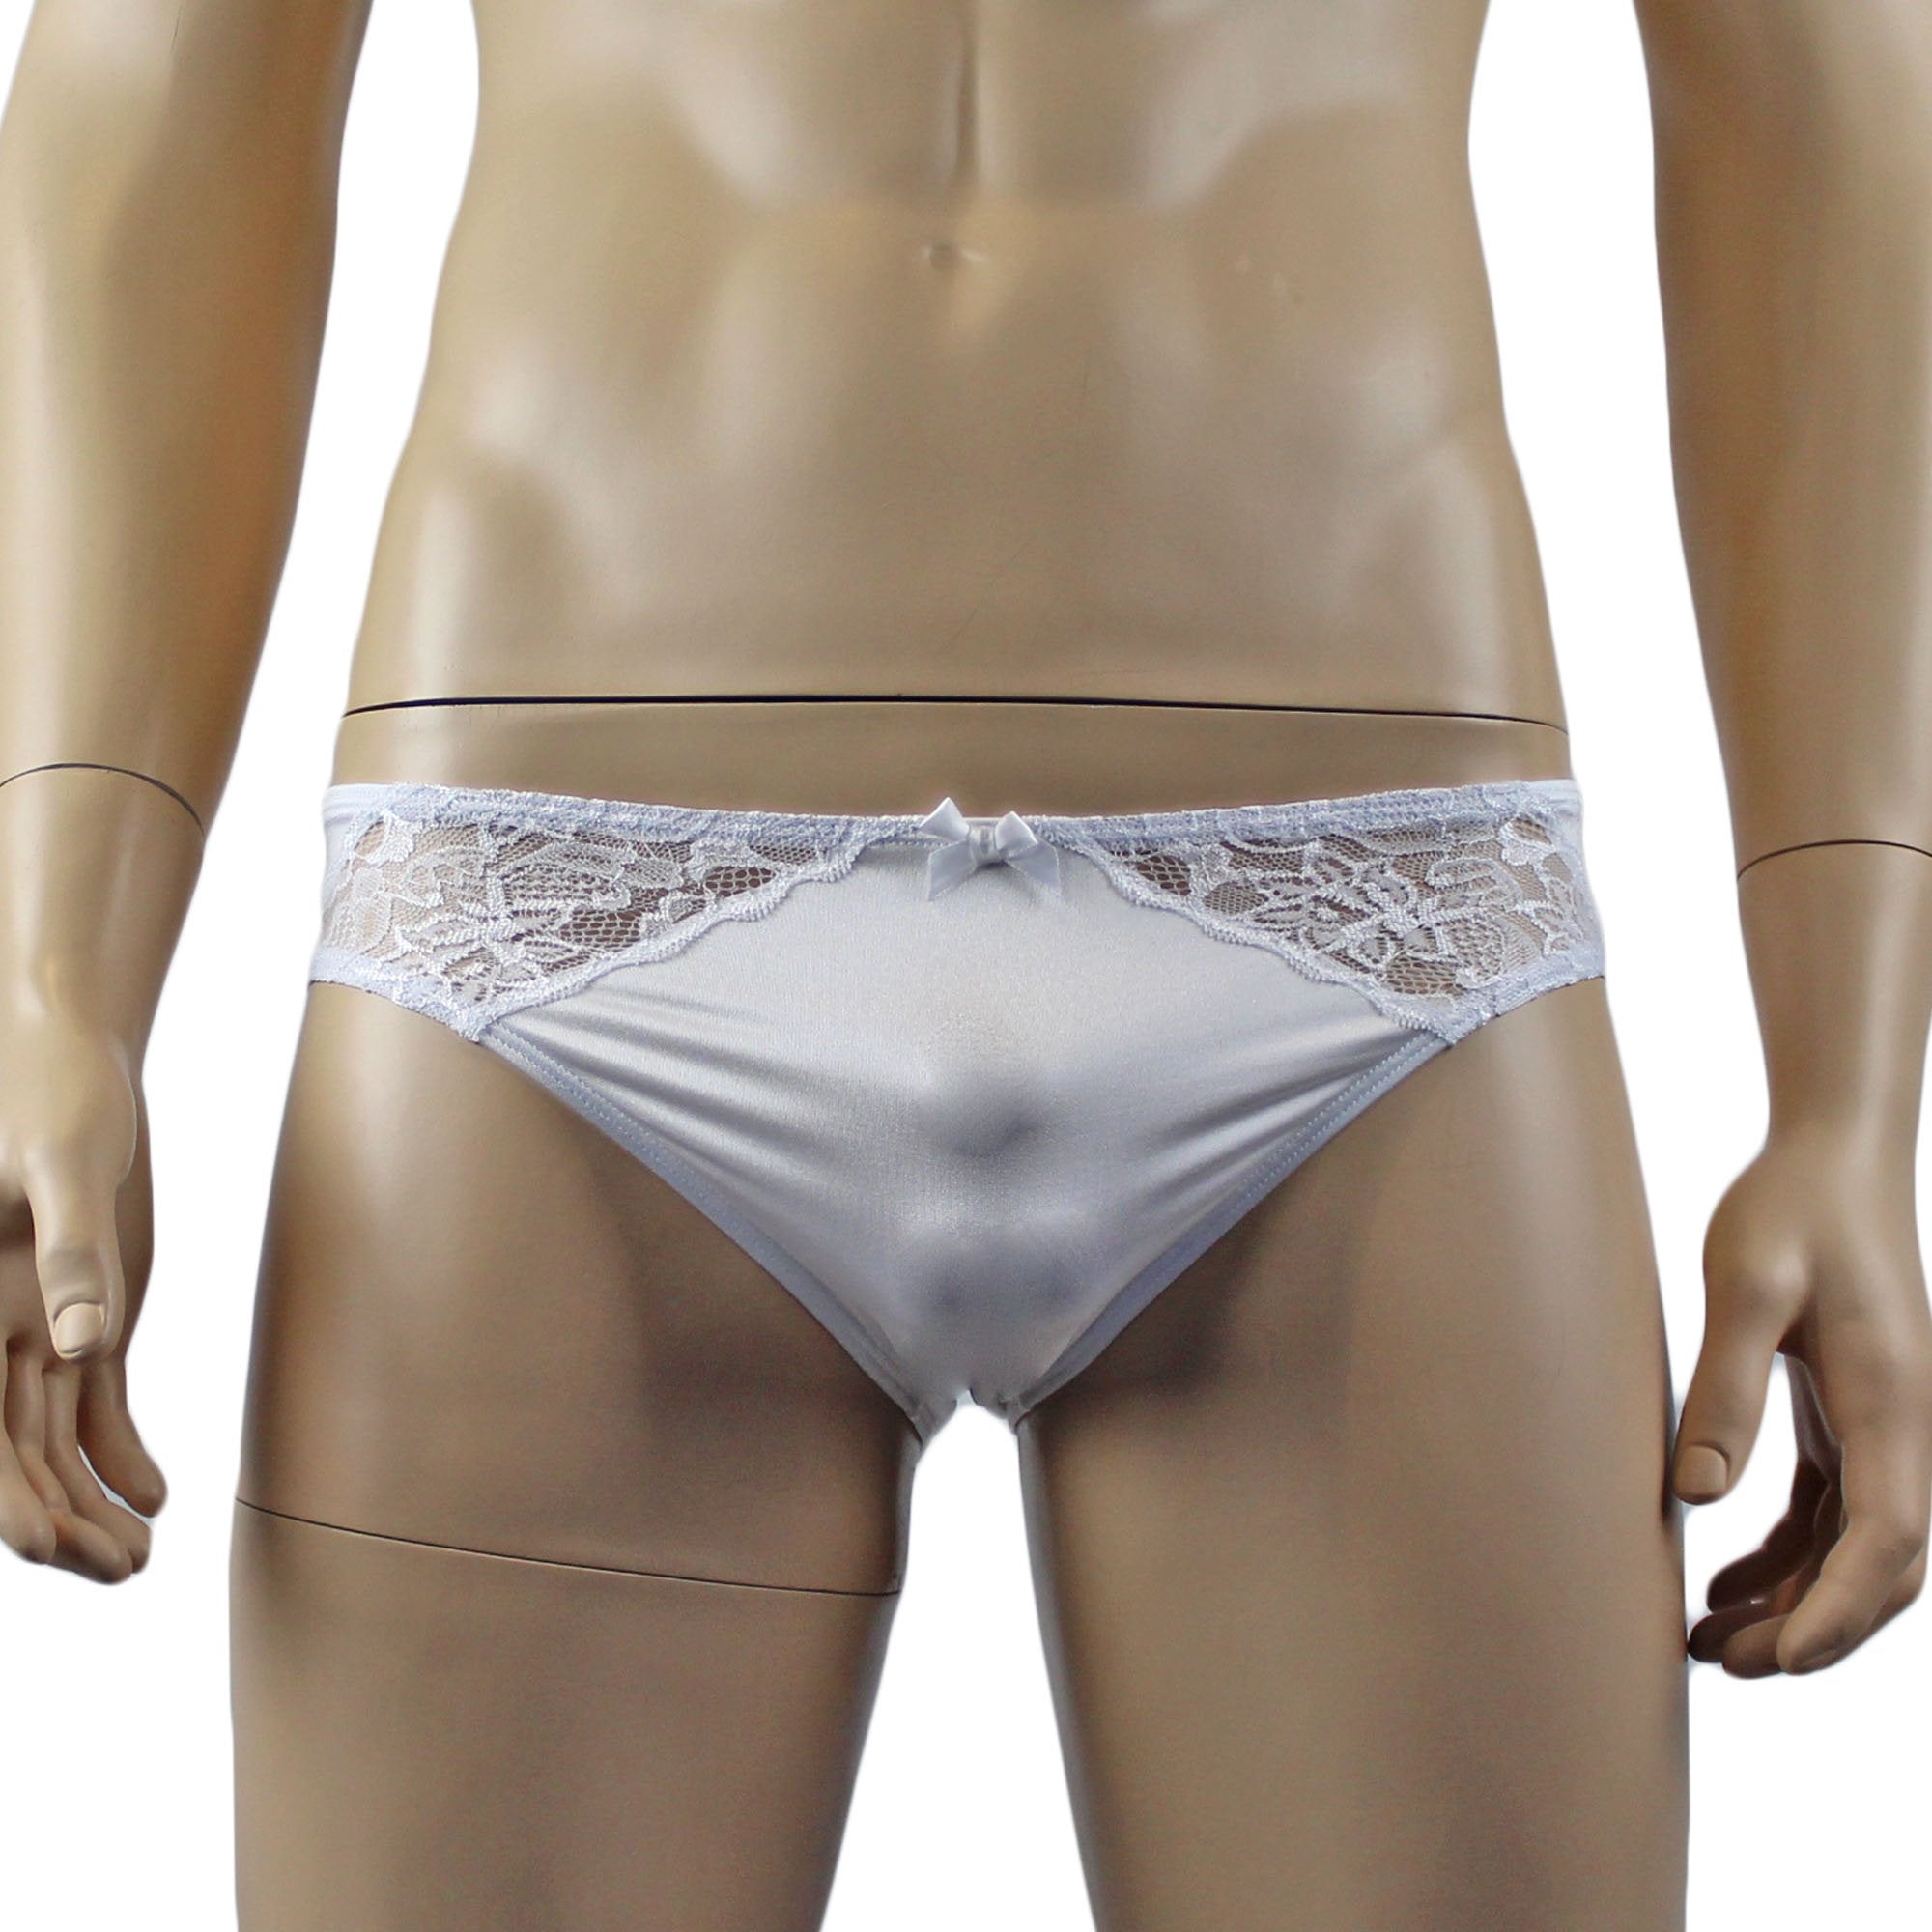 Male Romance Stretch Spandex Camisole Top & Brief for Lingerie Men White or Black